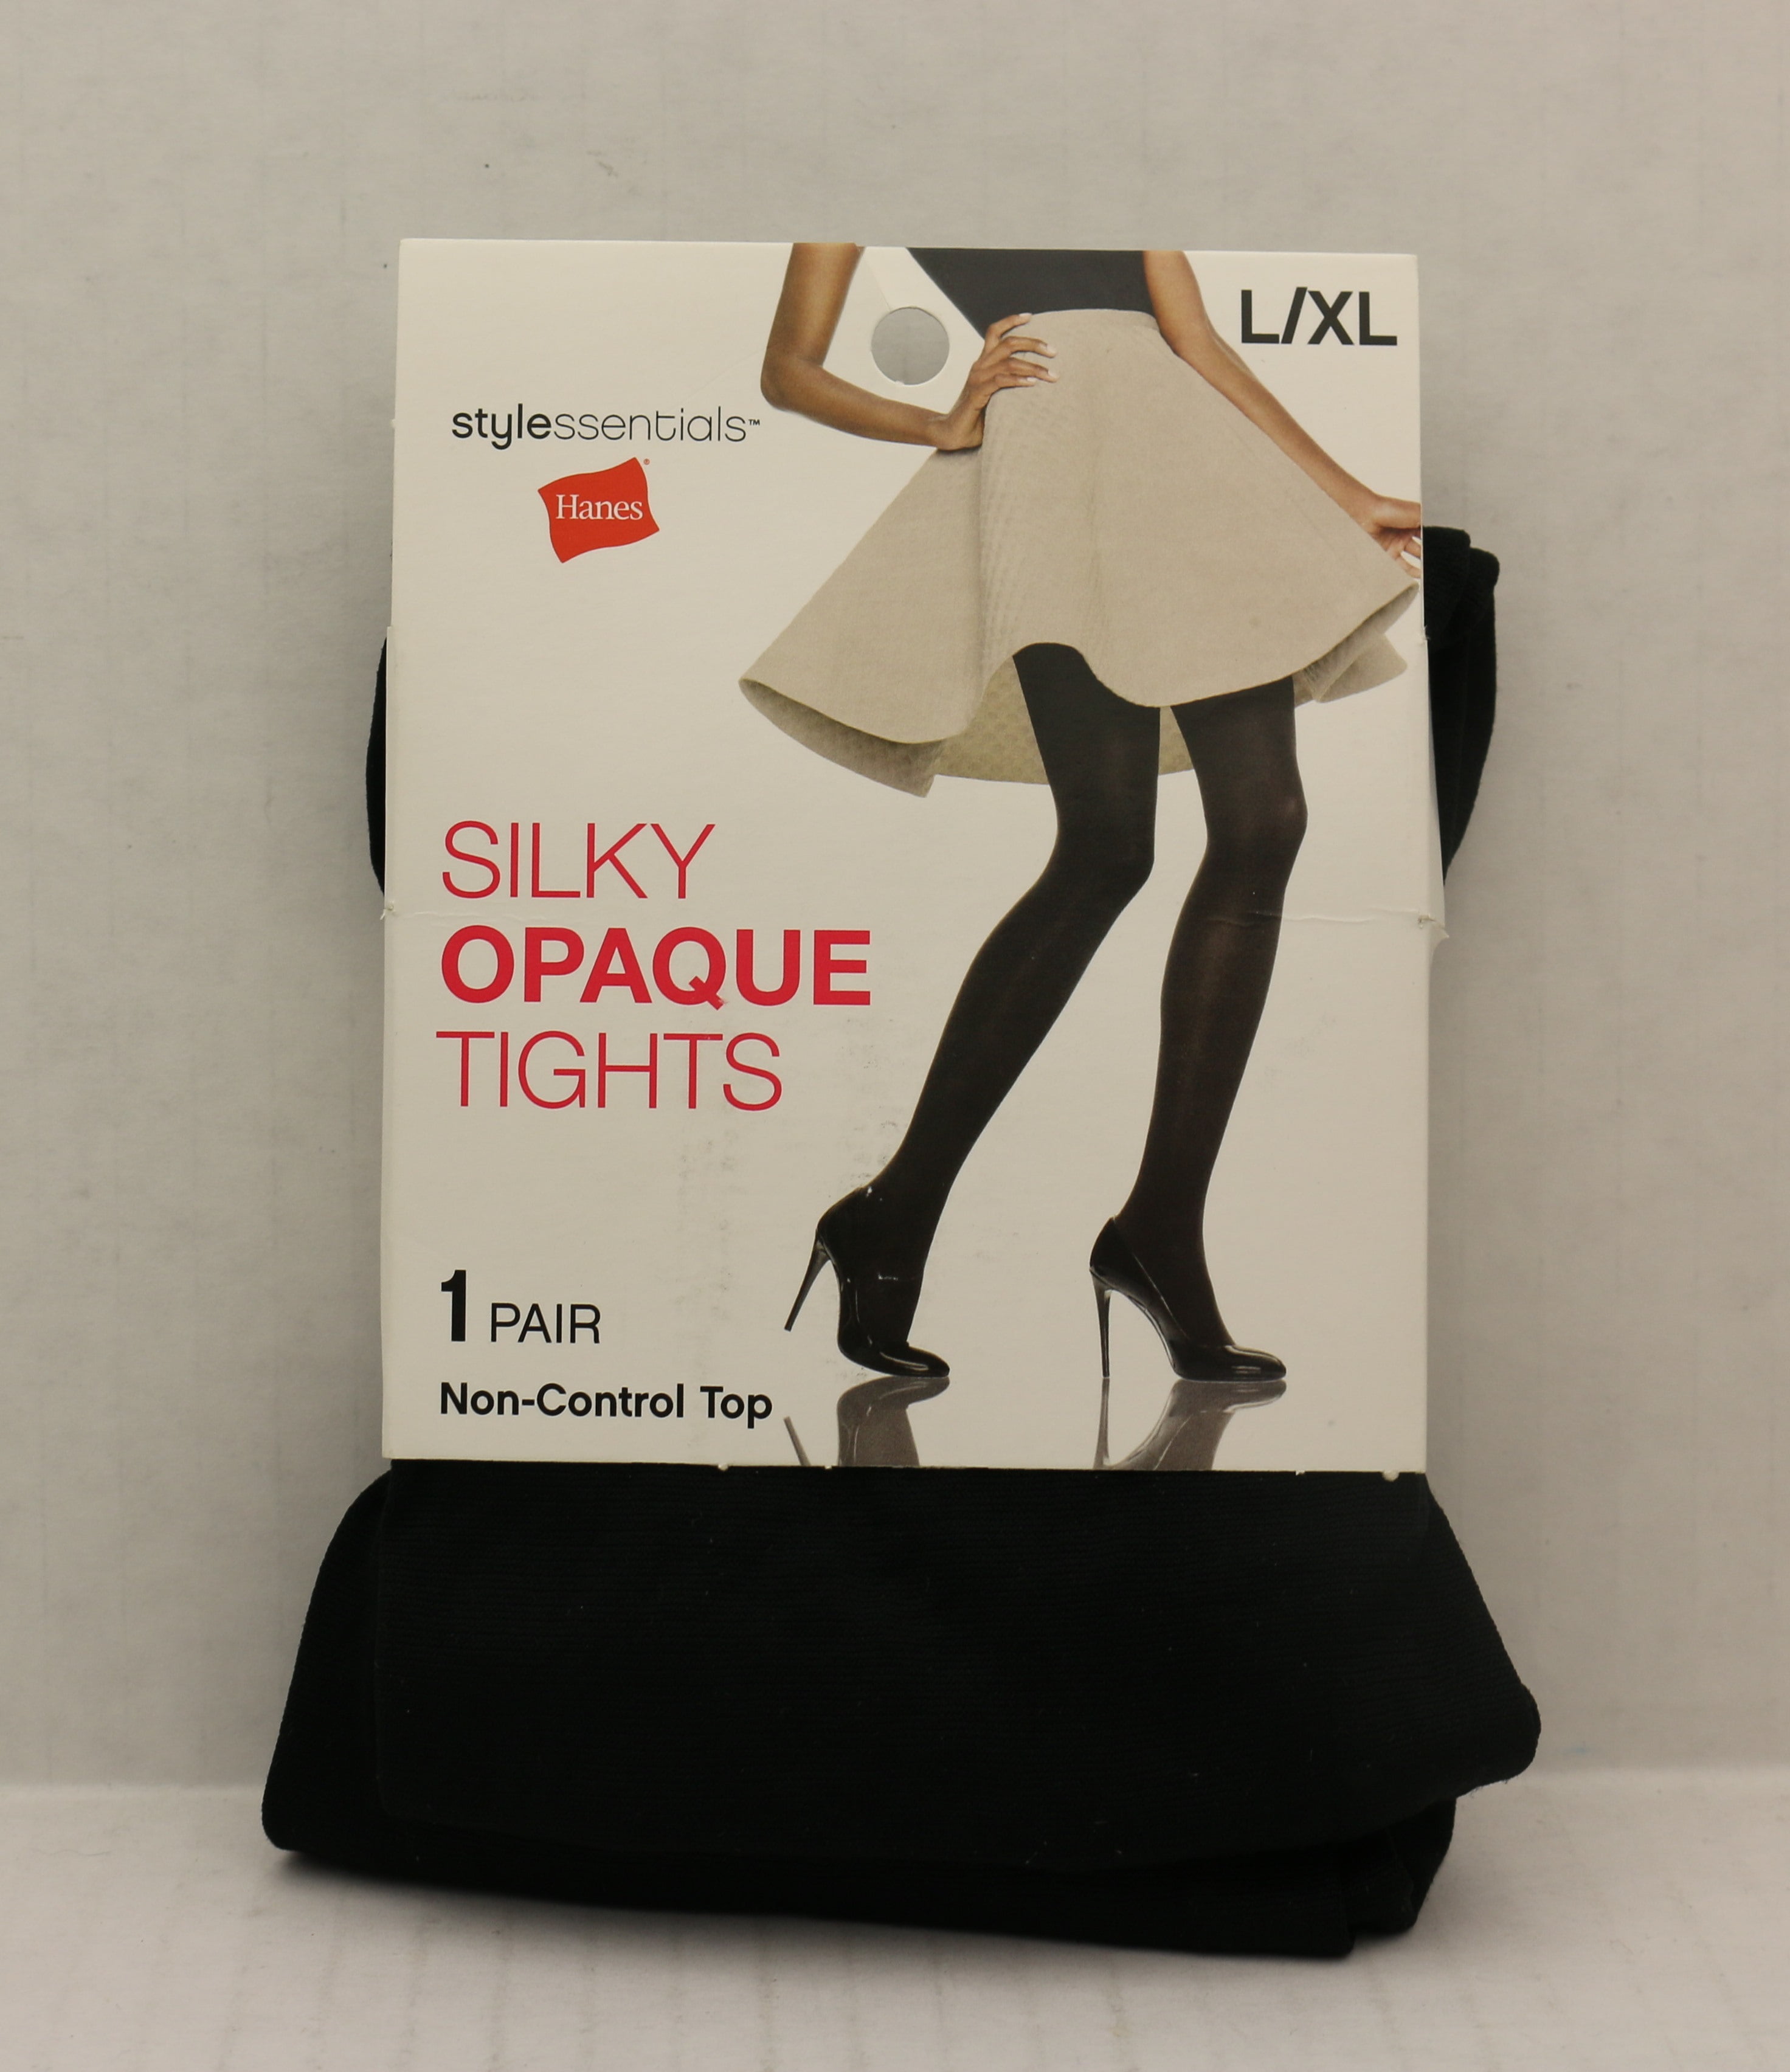 Hanes StyleEssentials Silky Opaque Tights, L/XL, Black, Non